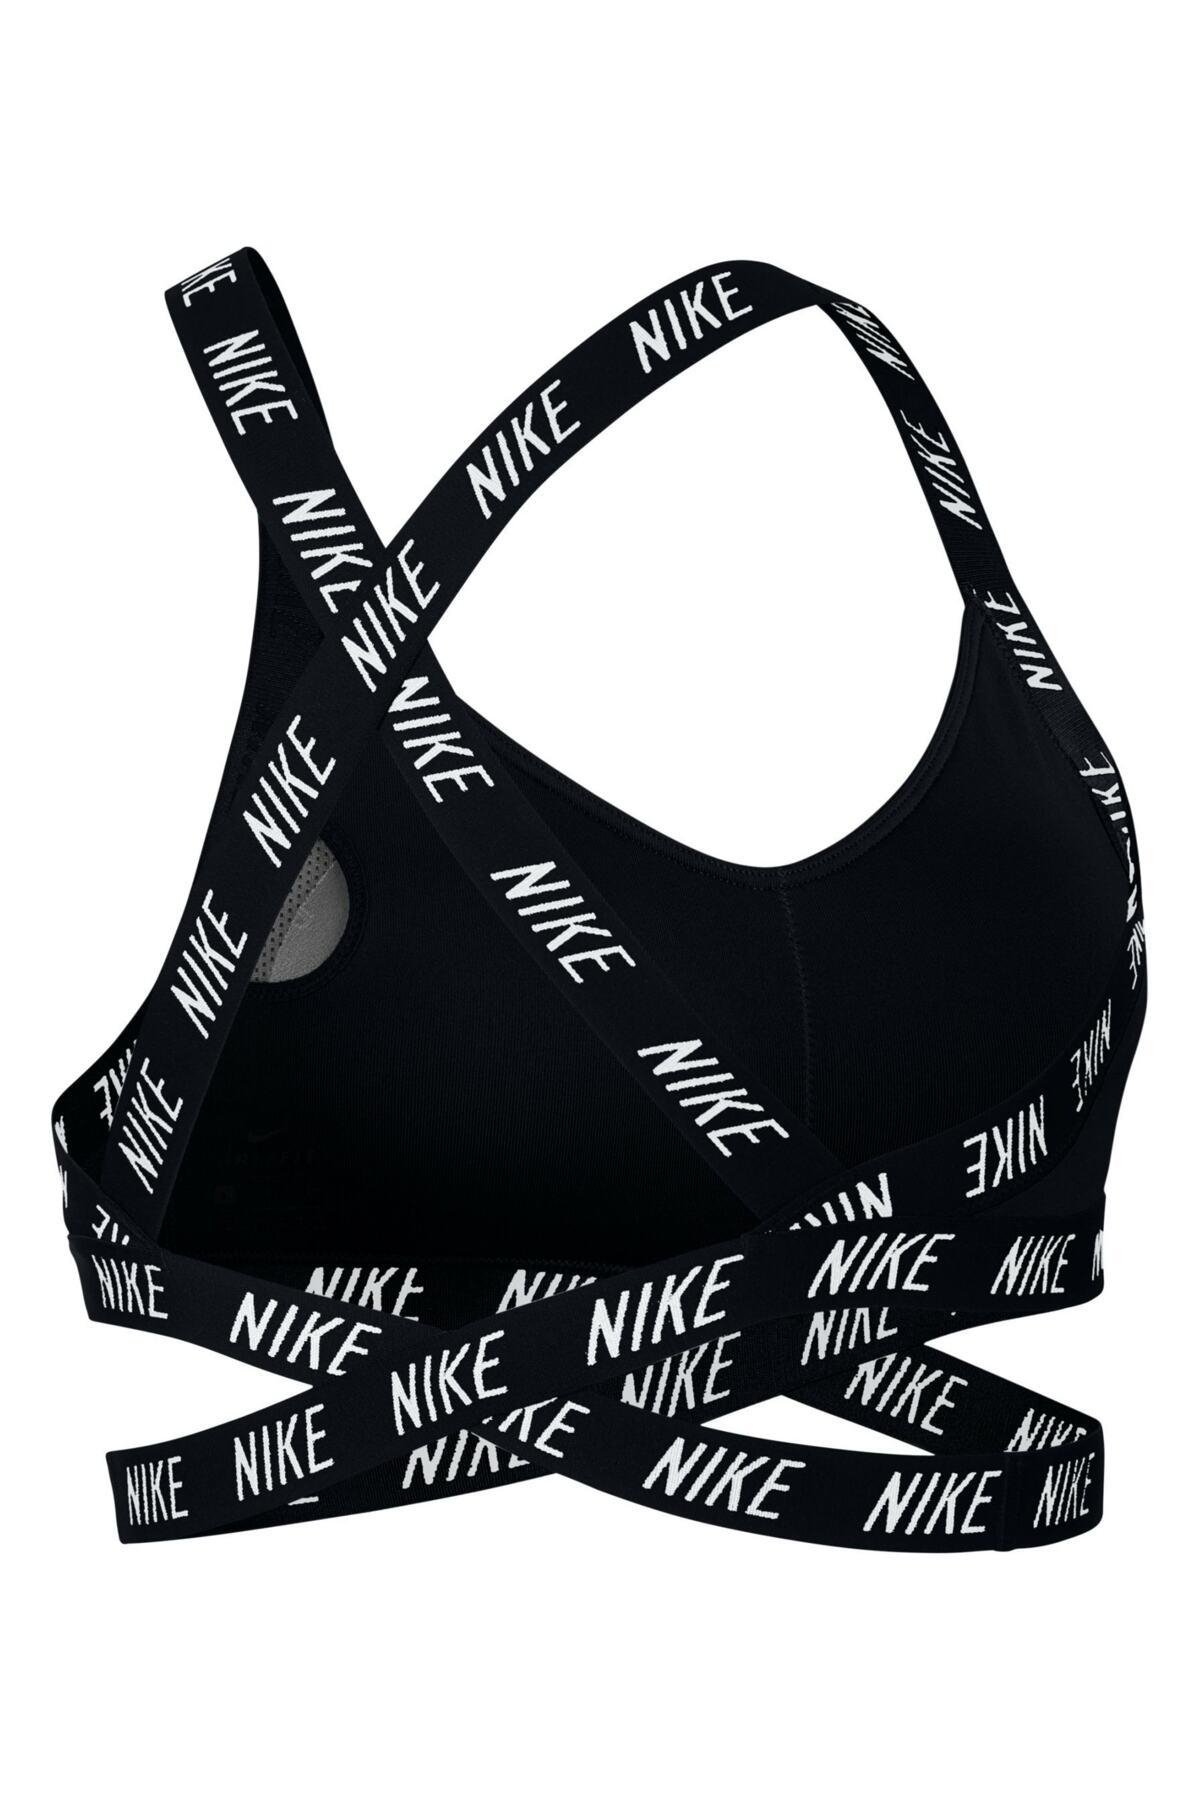 Nike Synthetic Dri-fit Indy Logo Sports Bra in Black/Black/White (Black ...